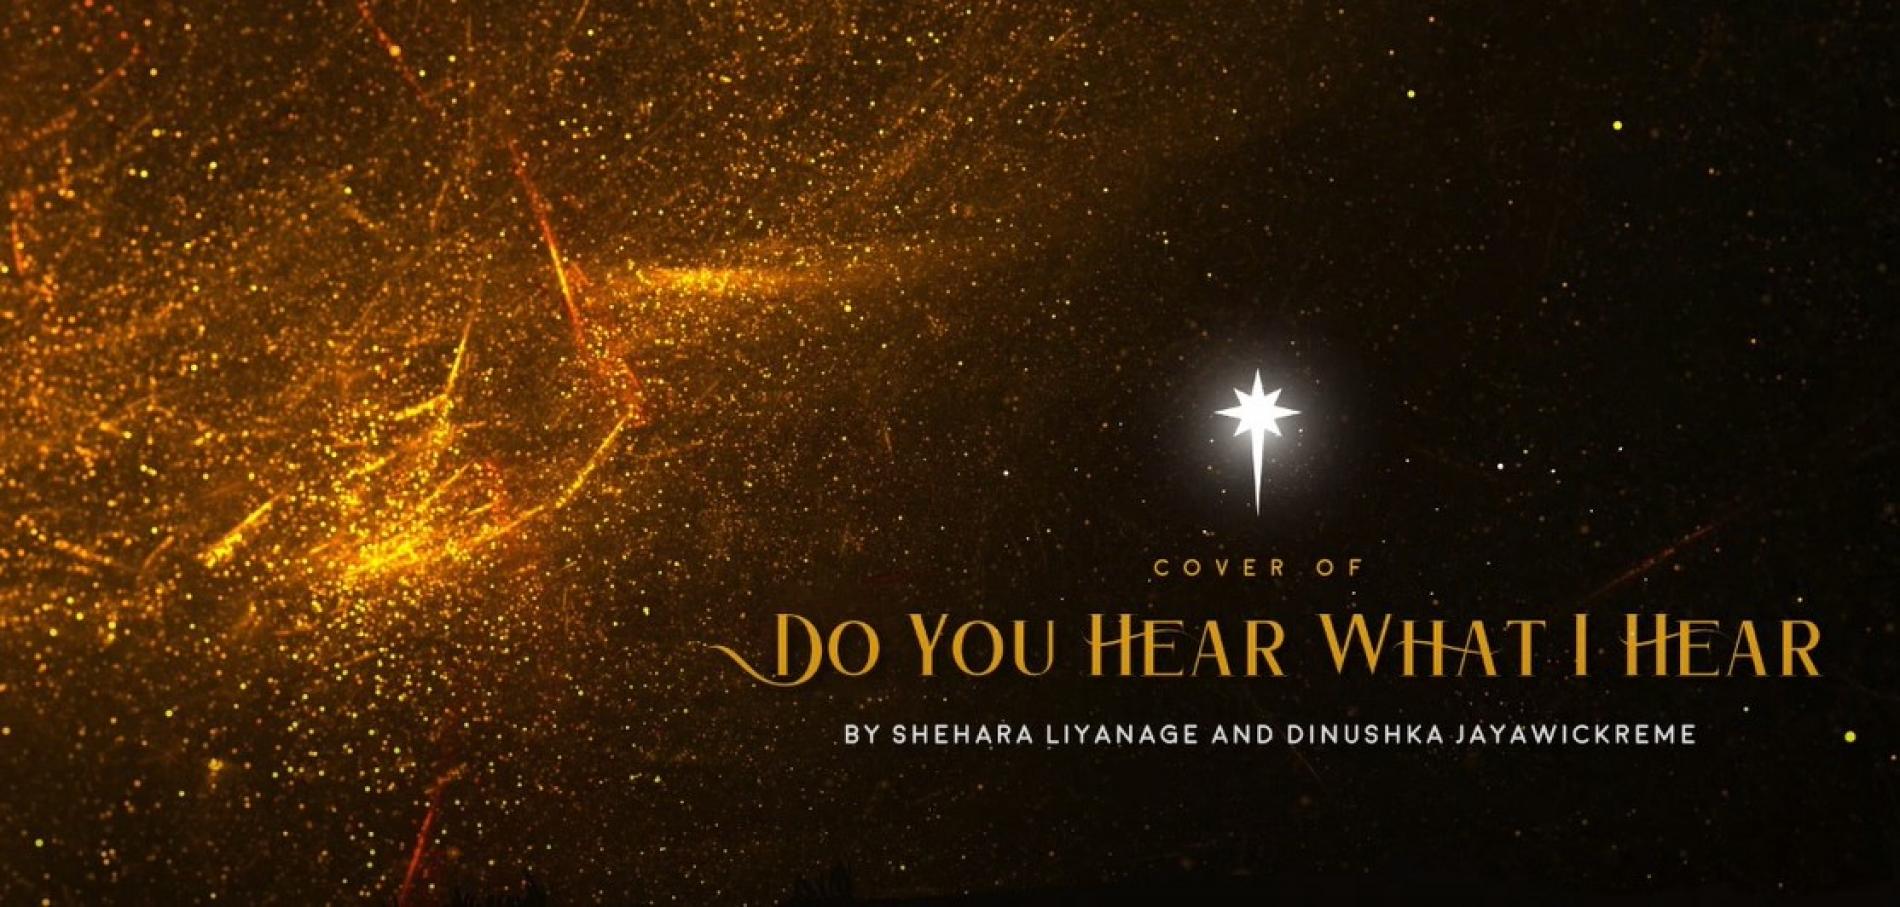 New Music : Do You Hear What I Hear By Shehara Liyanage & Dinuksha Jayawickreme – Cover